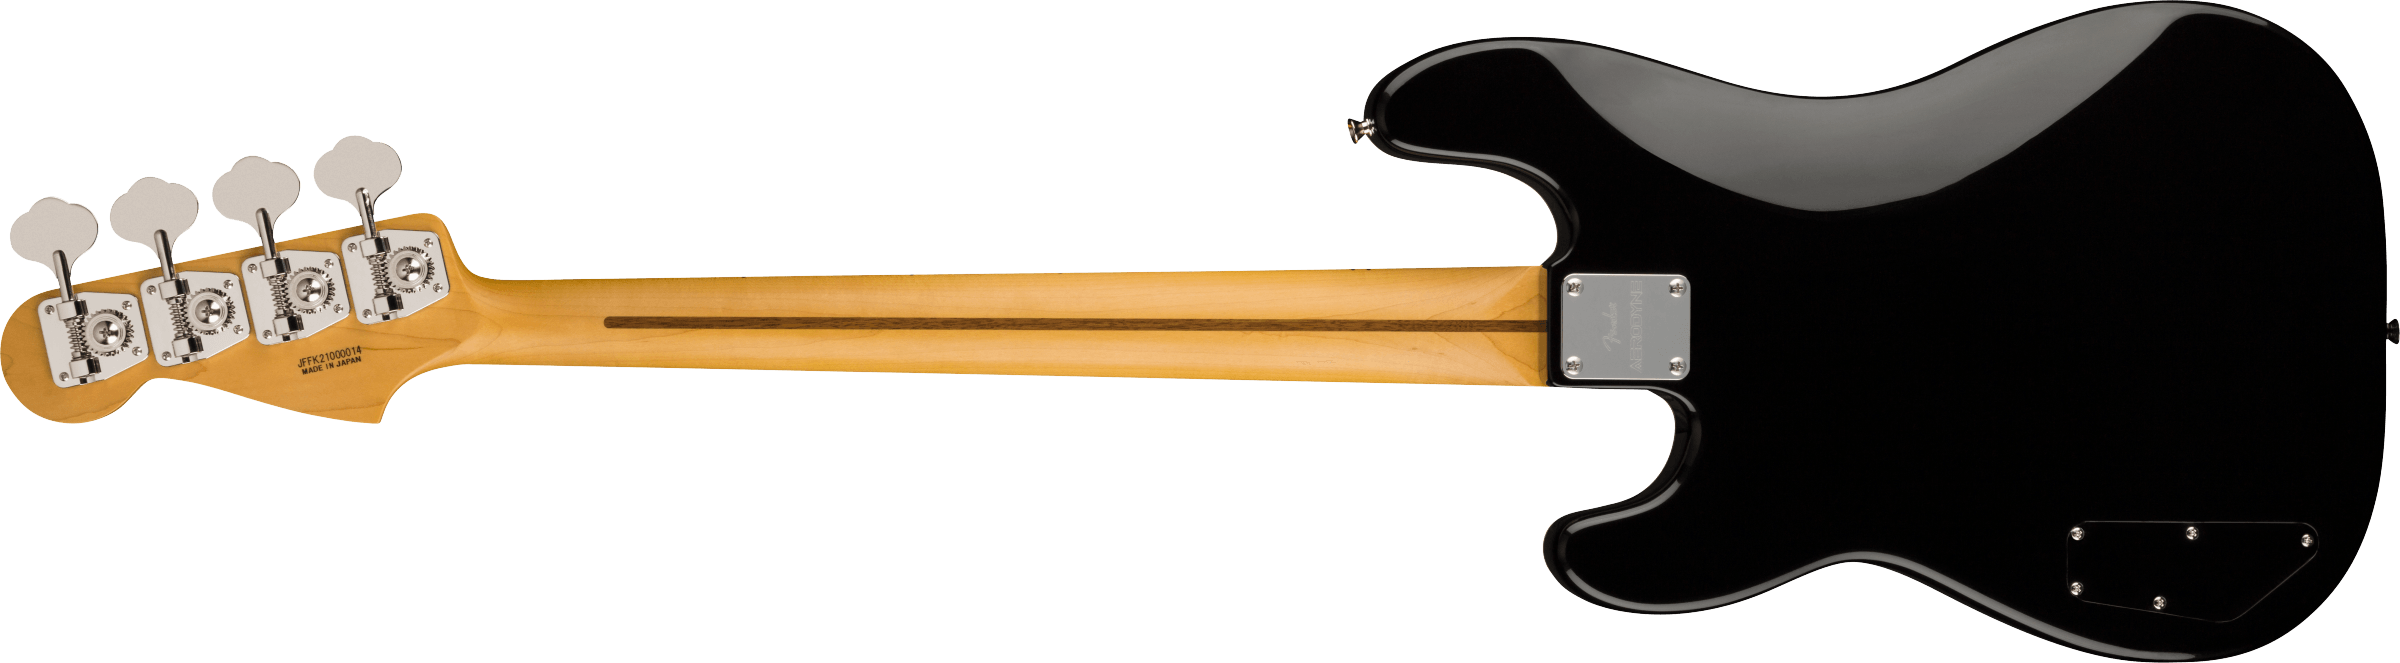 Fender Precision Bass Aerodyne Special Jap Mn - Hot Rod Burst - Solid body elektrische bas - Variation 1